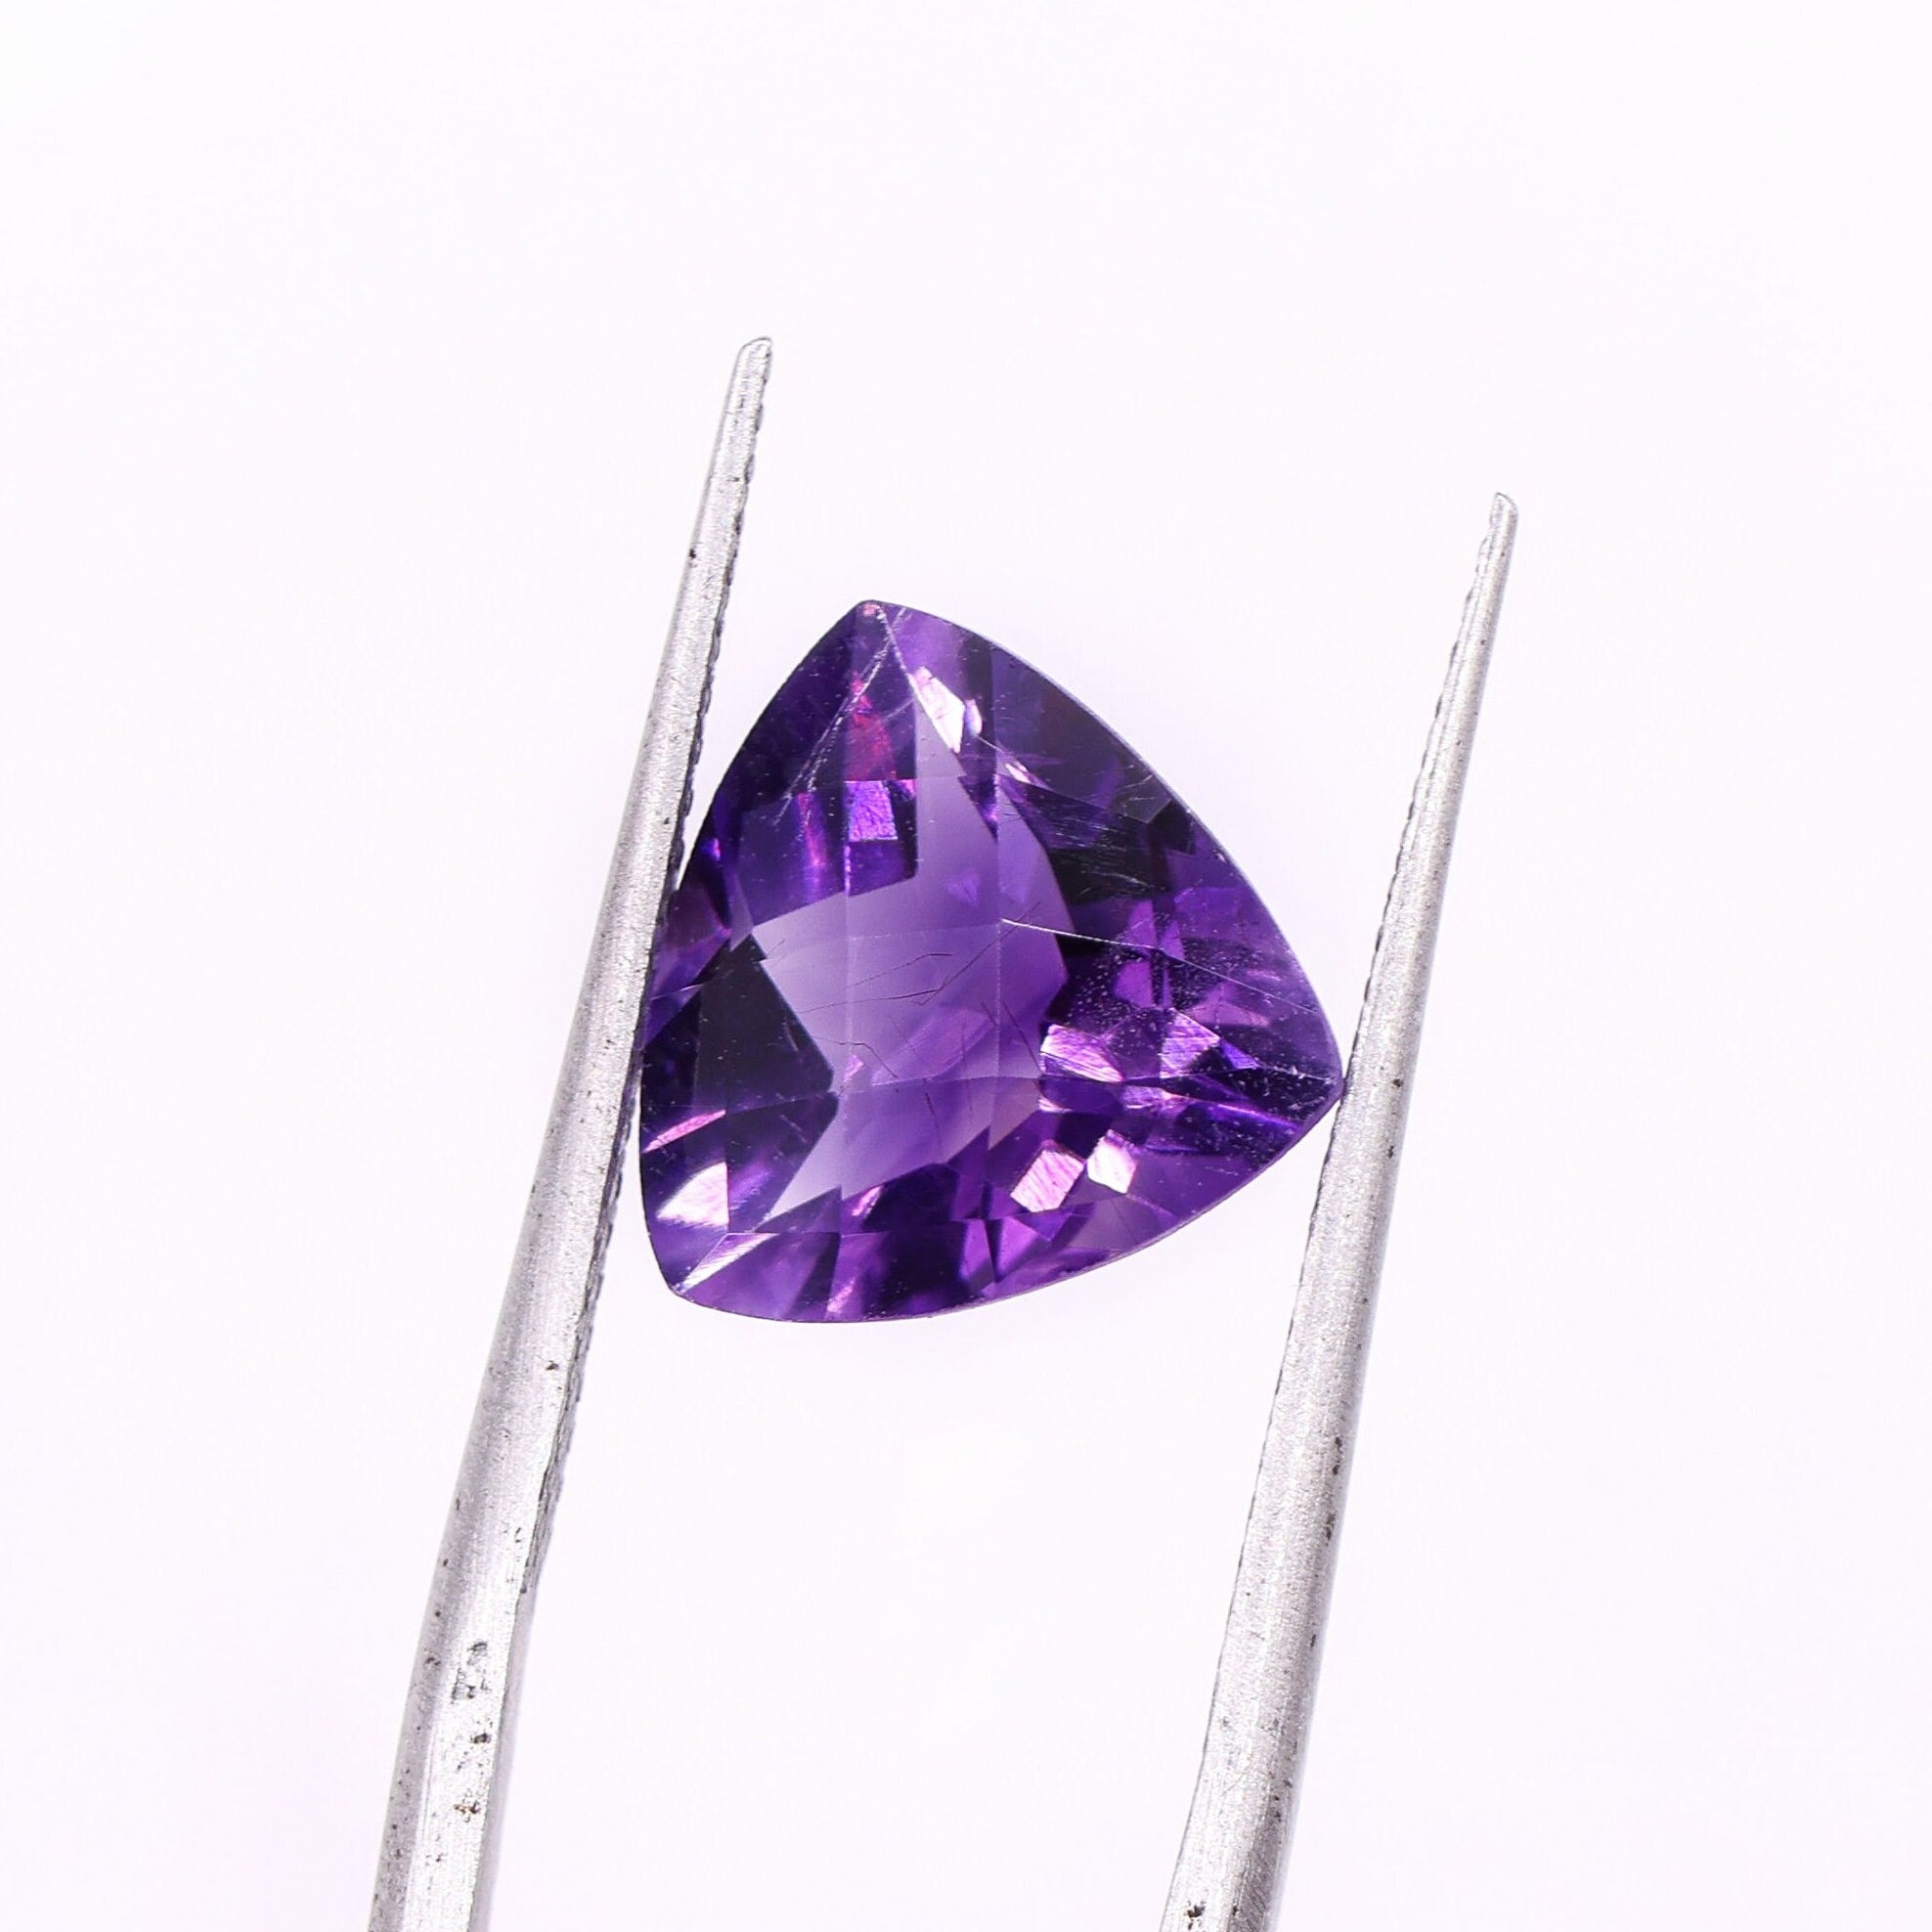 Gemstones-Deep Purple Amethyst Checker Topped Loose Gemstones || Trillion 5mm 9mm 10mm 11mm || Zambian Amethyst || February Birthstone || - NNJGemstones